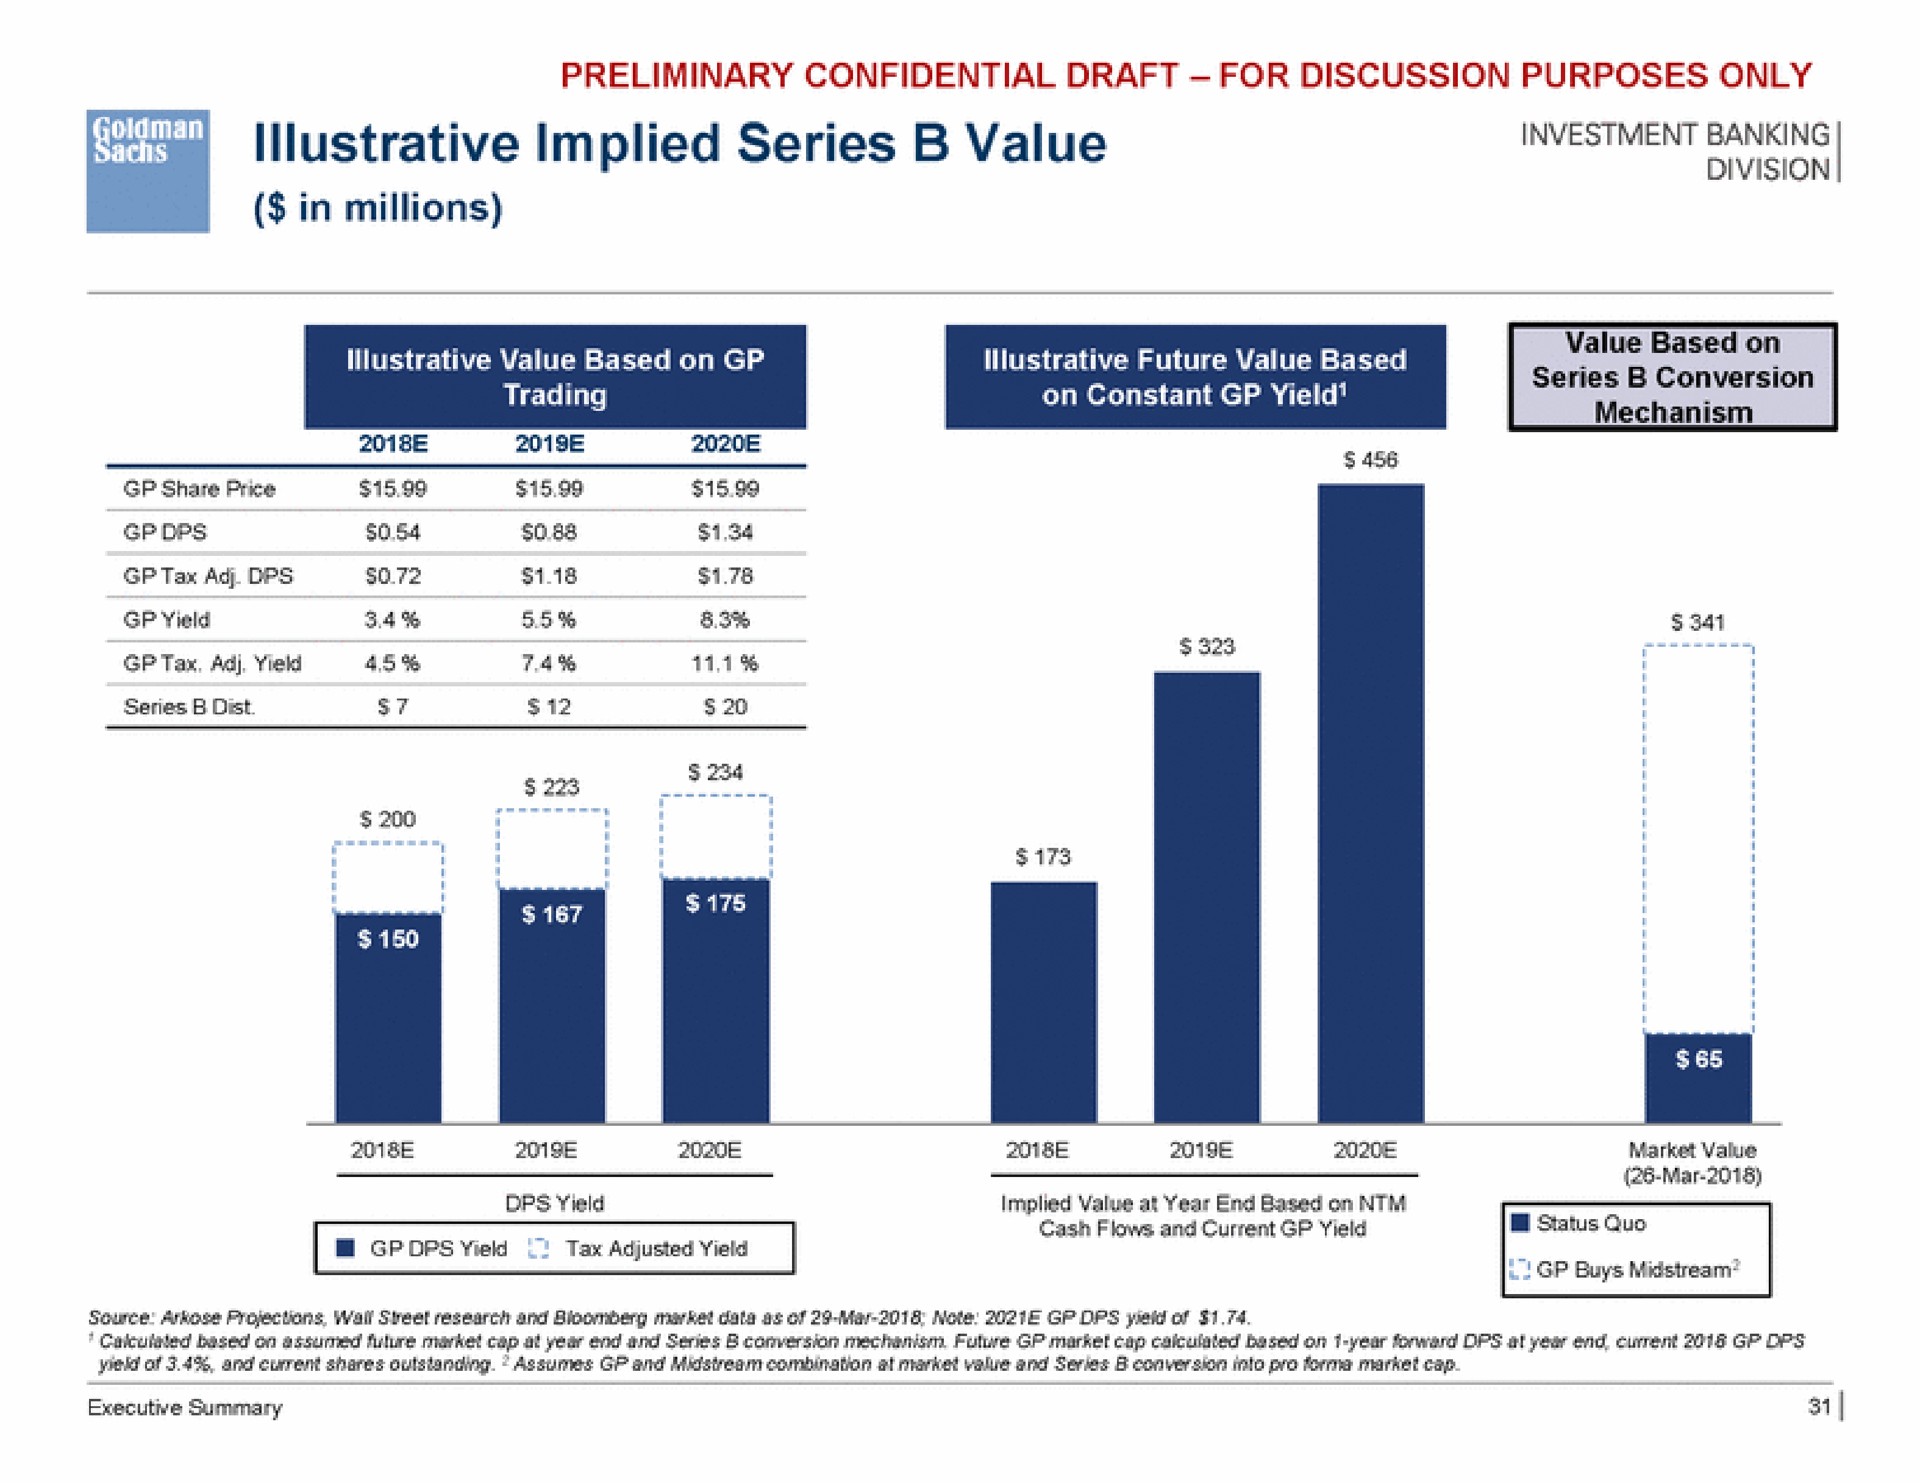 illustrative implied series value in millions | Goldman Sachs